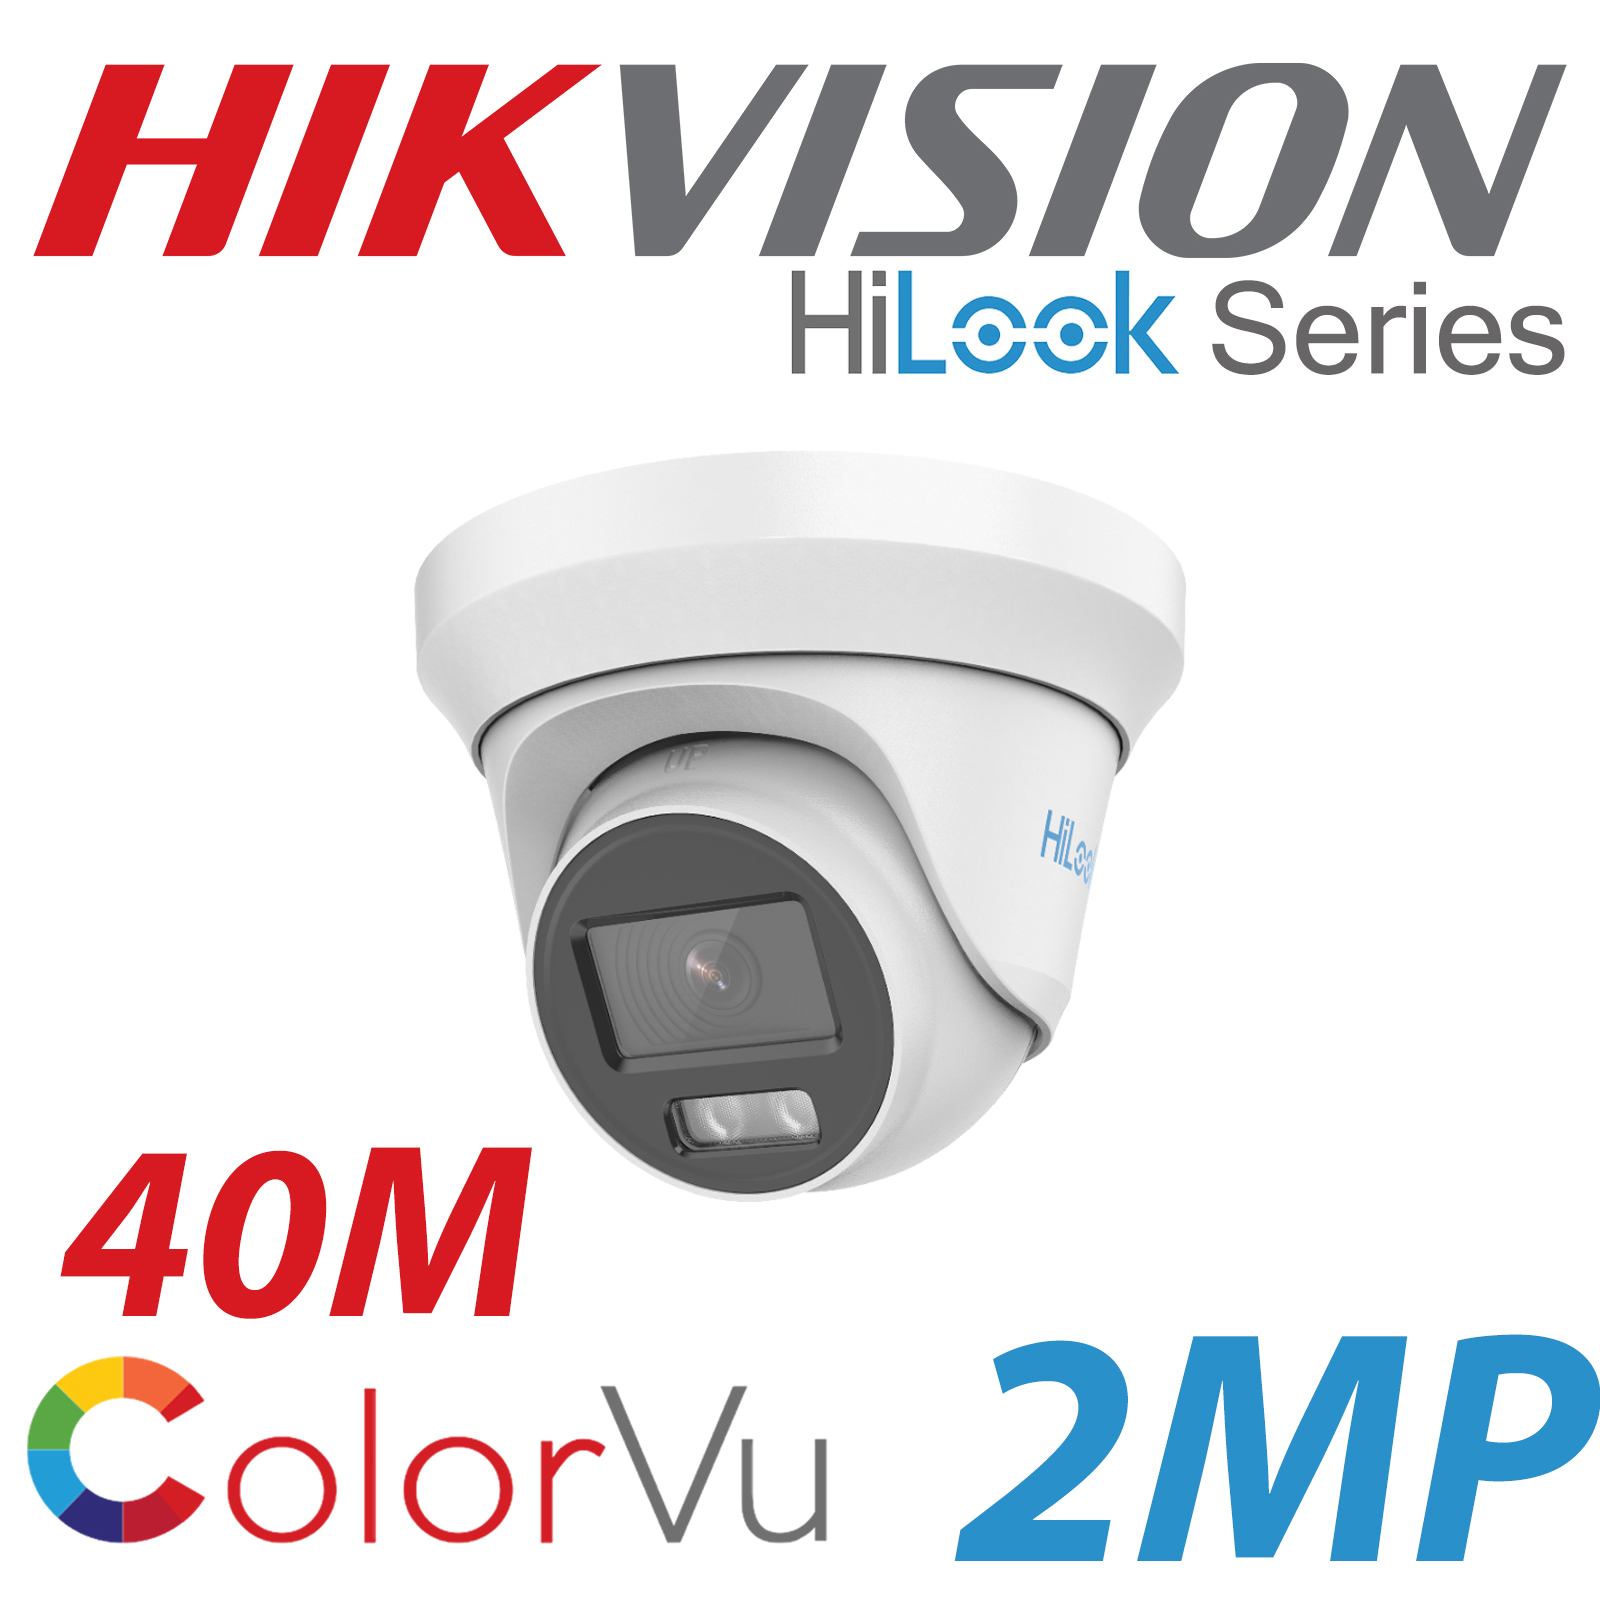 Bán Camera Dome HDTVI 2MP Hilook THC-T229-M giá rẻ